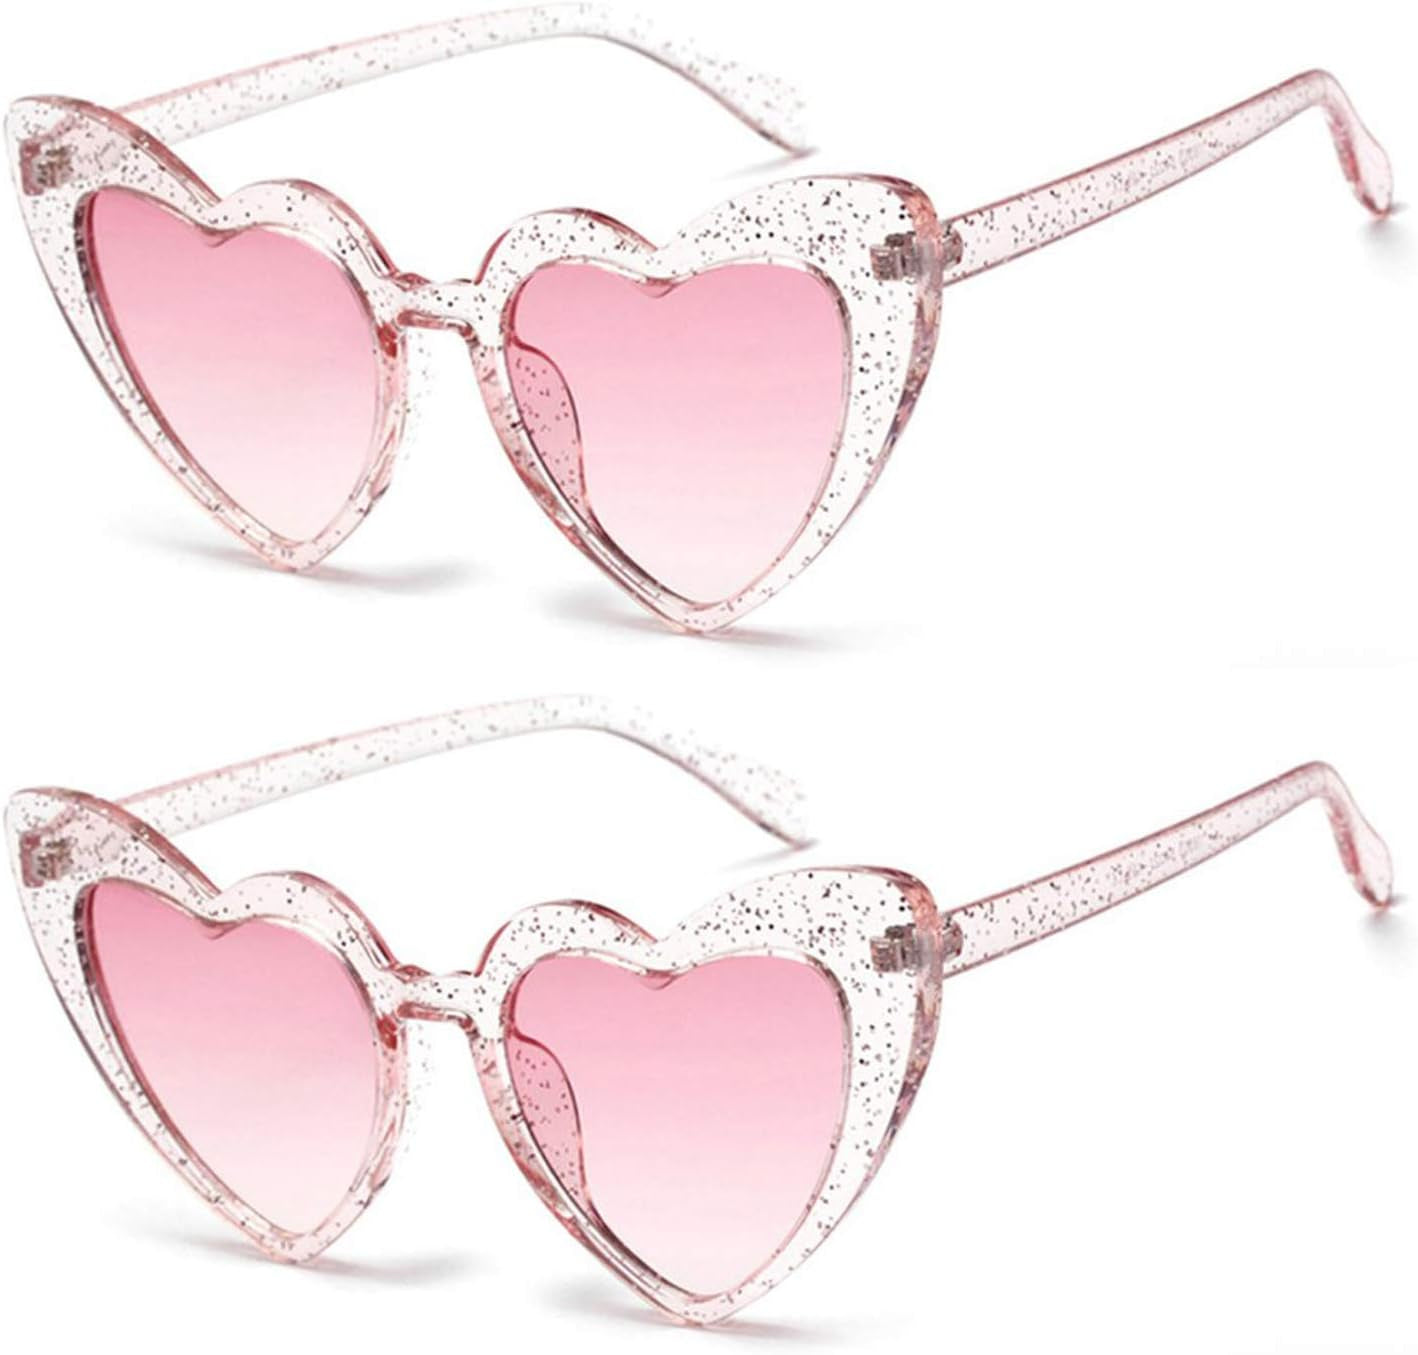 Clout Heart Shaped Sunglasses Goggles Vintage Cat Eye Mod Style Retro Kurt Cobain Glasses